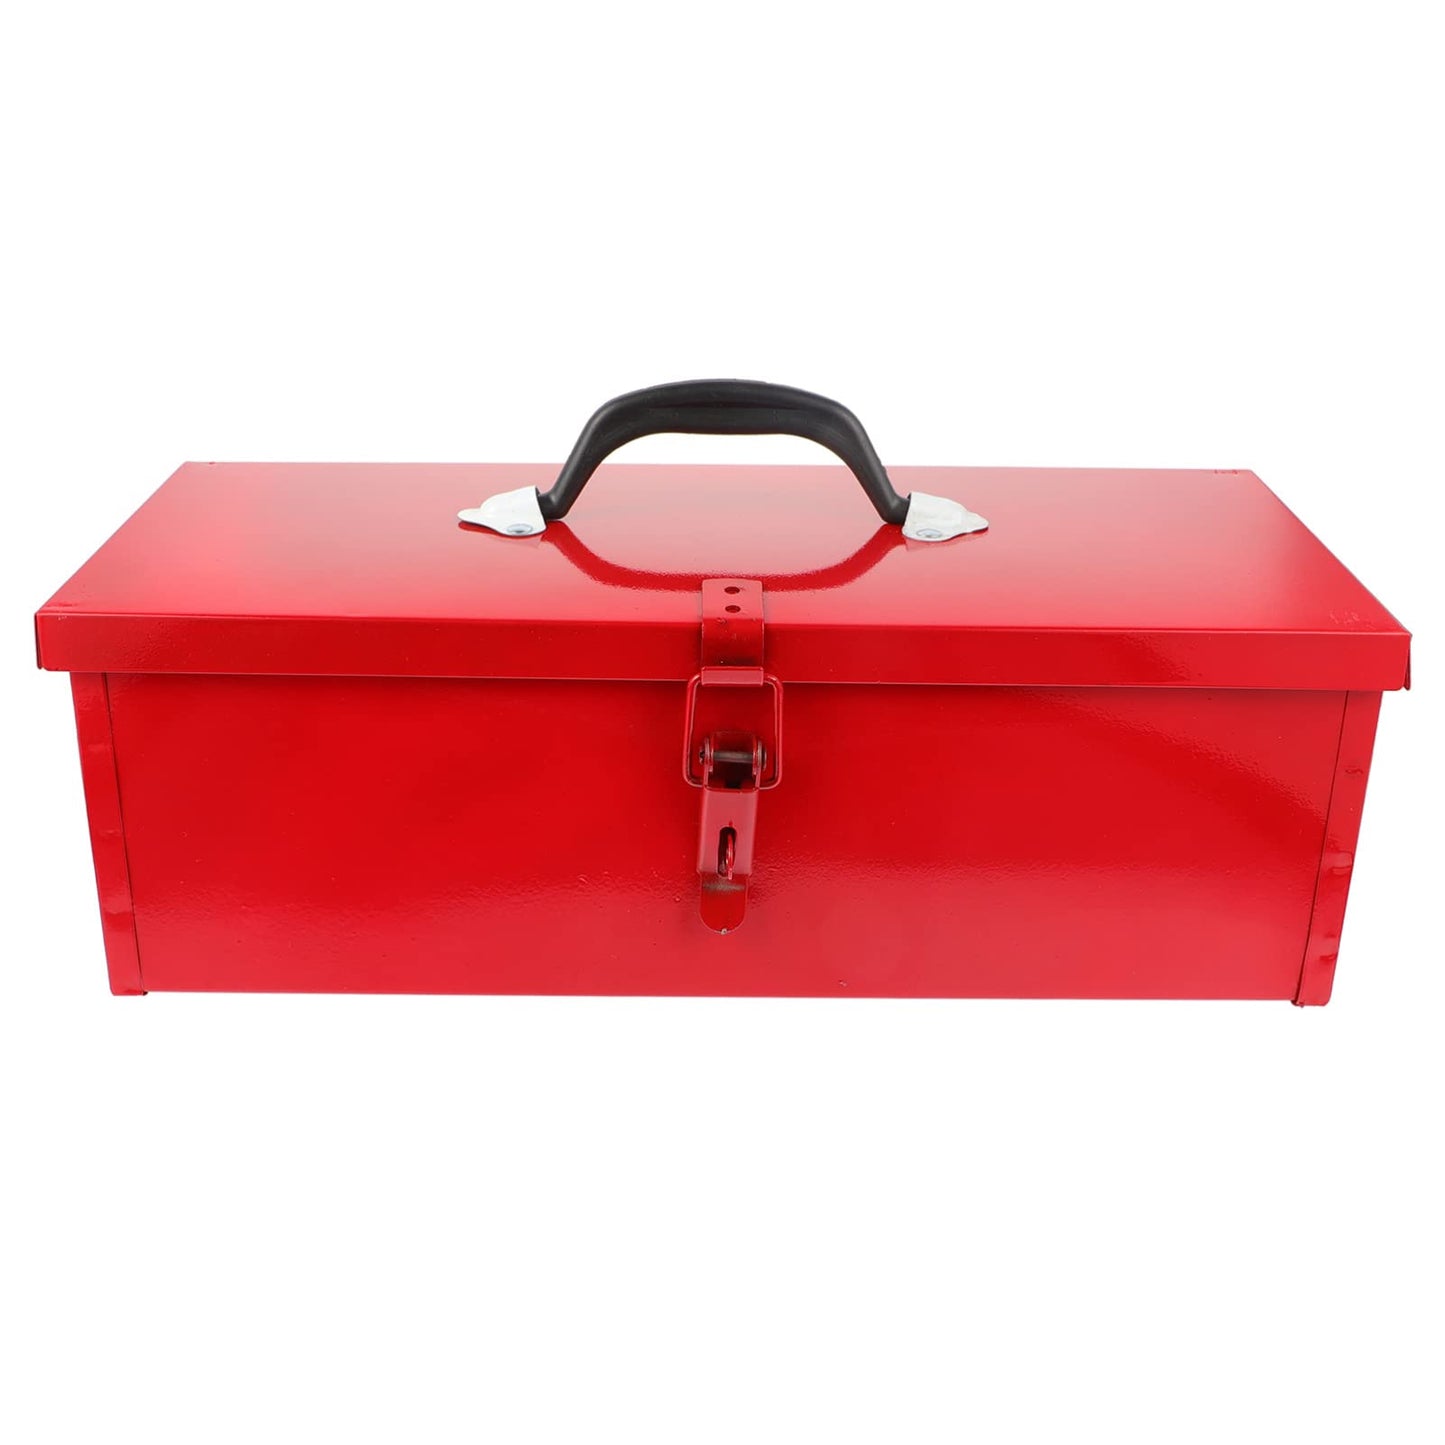 DOITOOL Red Metal Tool Box Iron Sheet Tool Box Metal Toolbox Red Metal Tool Storage Case Red Metal Lockable Tool Box, Multi-function Tool Organizer,